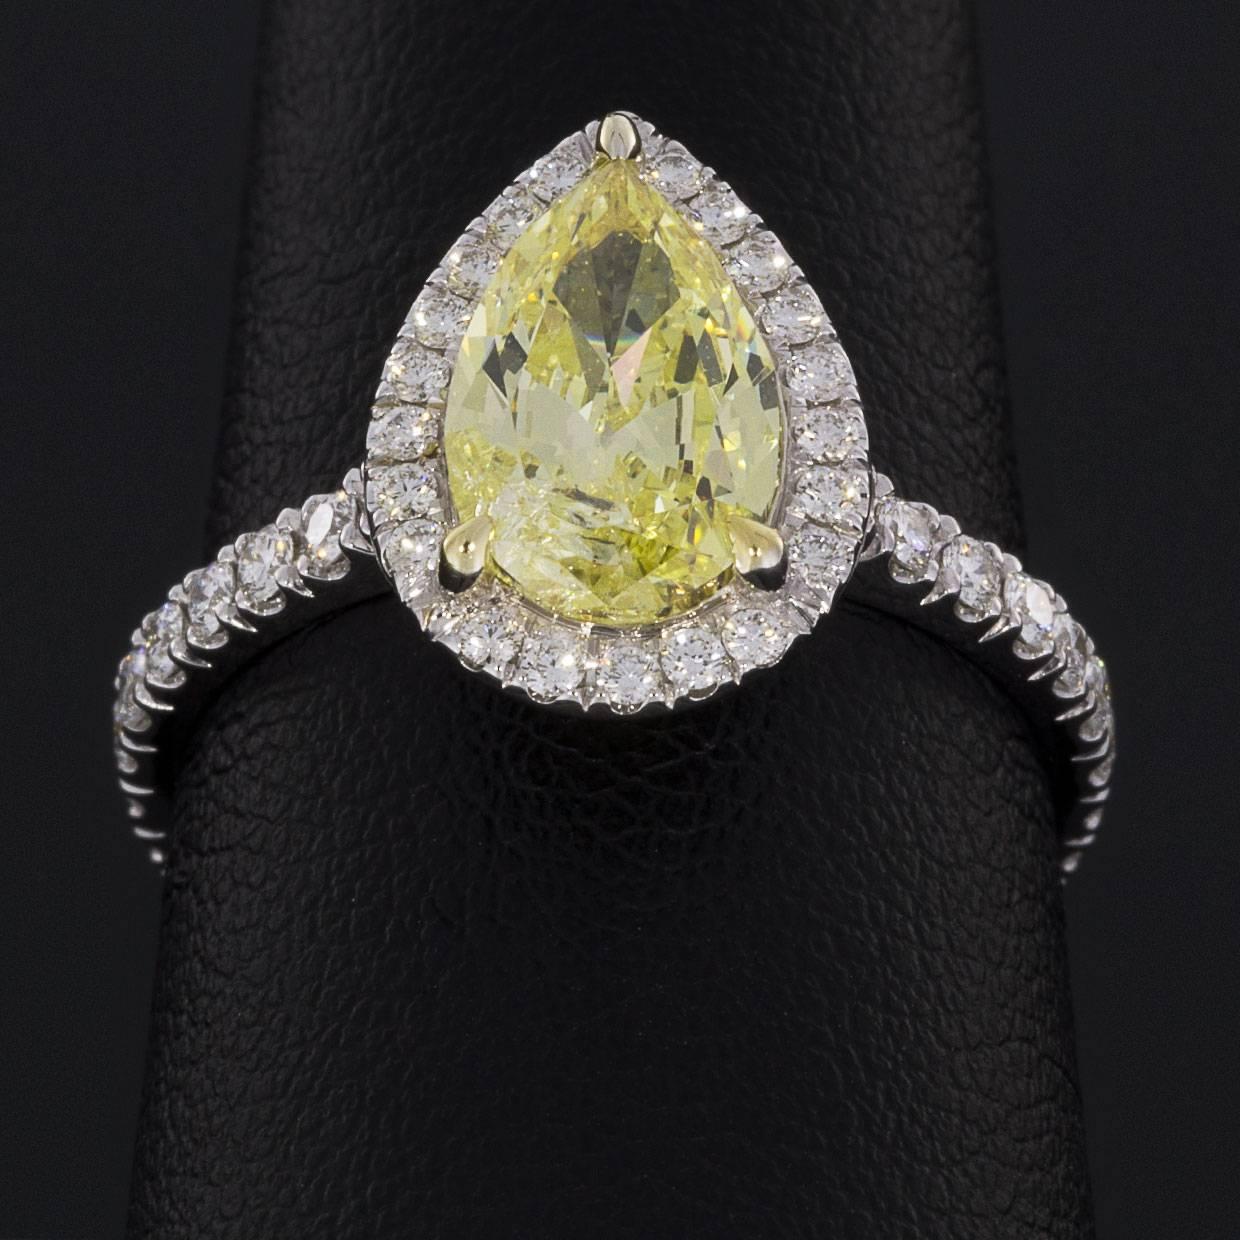 Women's 2.02 Carat Fancy Intense Yellow Pear Diamond Halo Engagement Ring